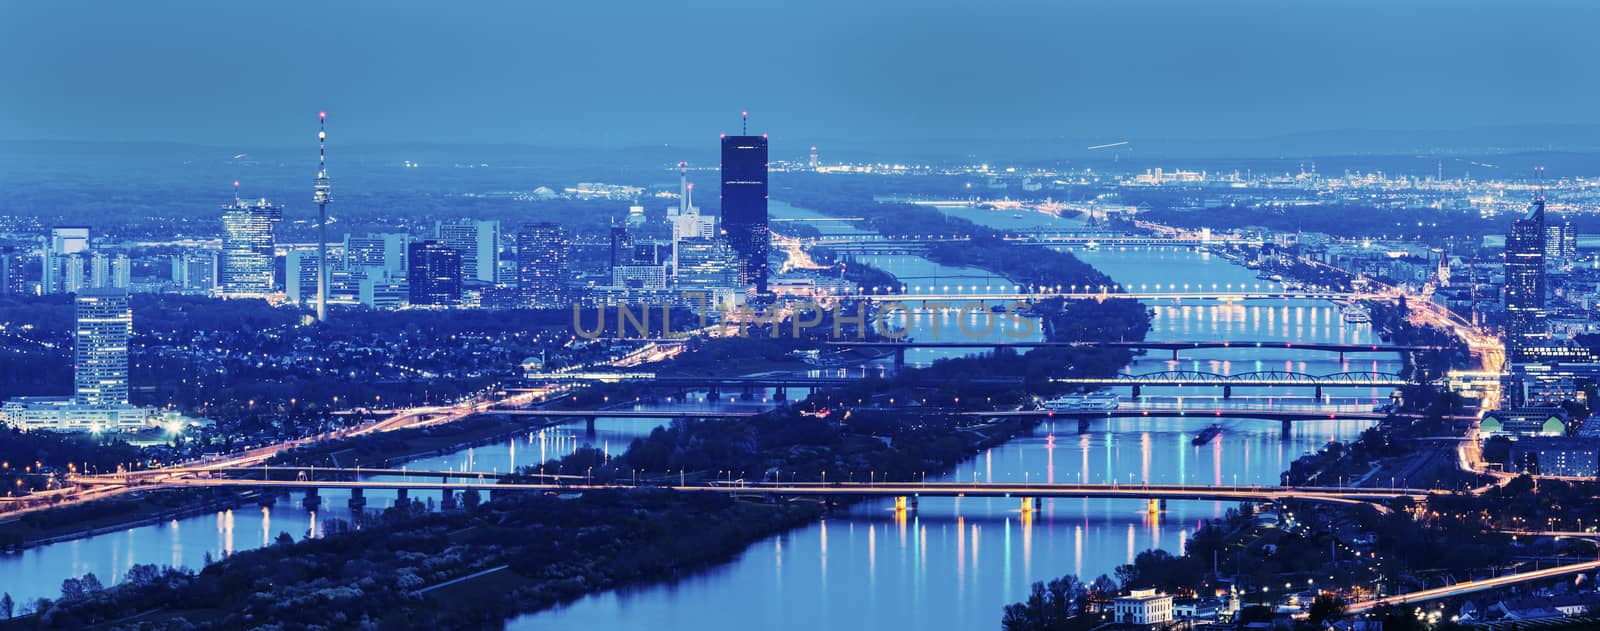 Skyline of Donau City - Vienna DC and bridges on Danube River Vienna, Austria.